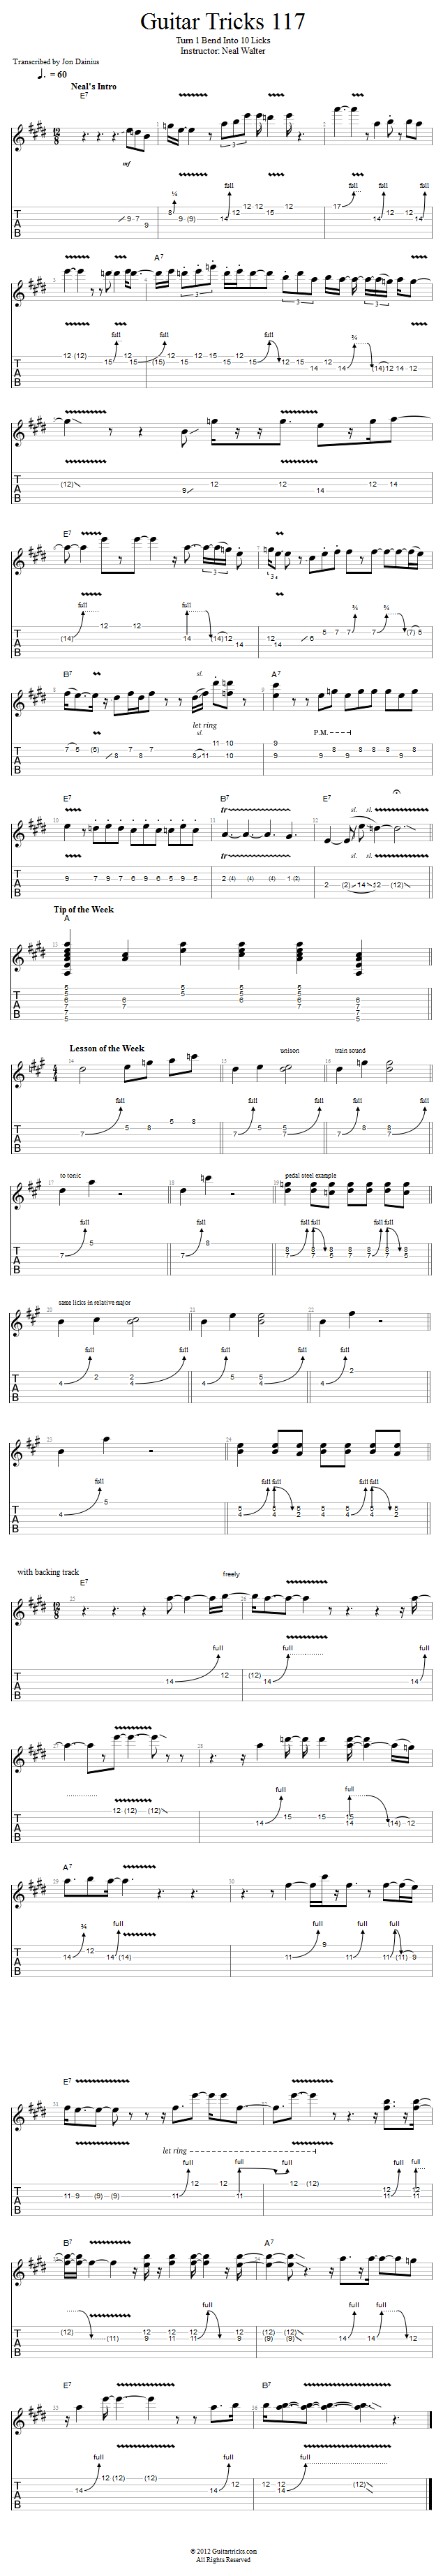 Guitar Tricks 117: Turn 1 Bend Into 10 Licks song notation